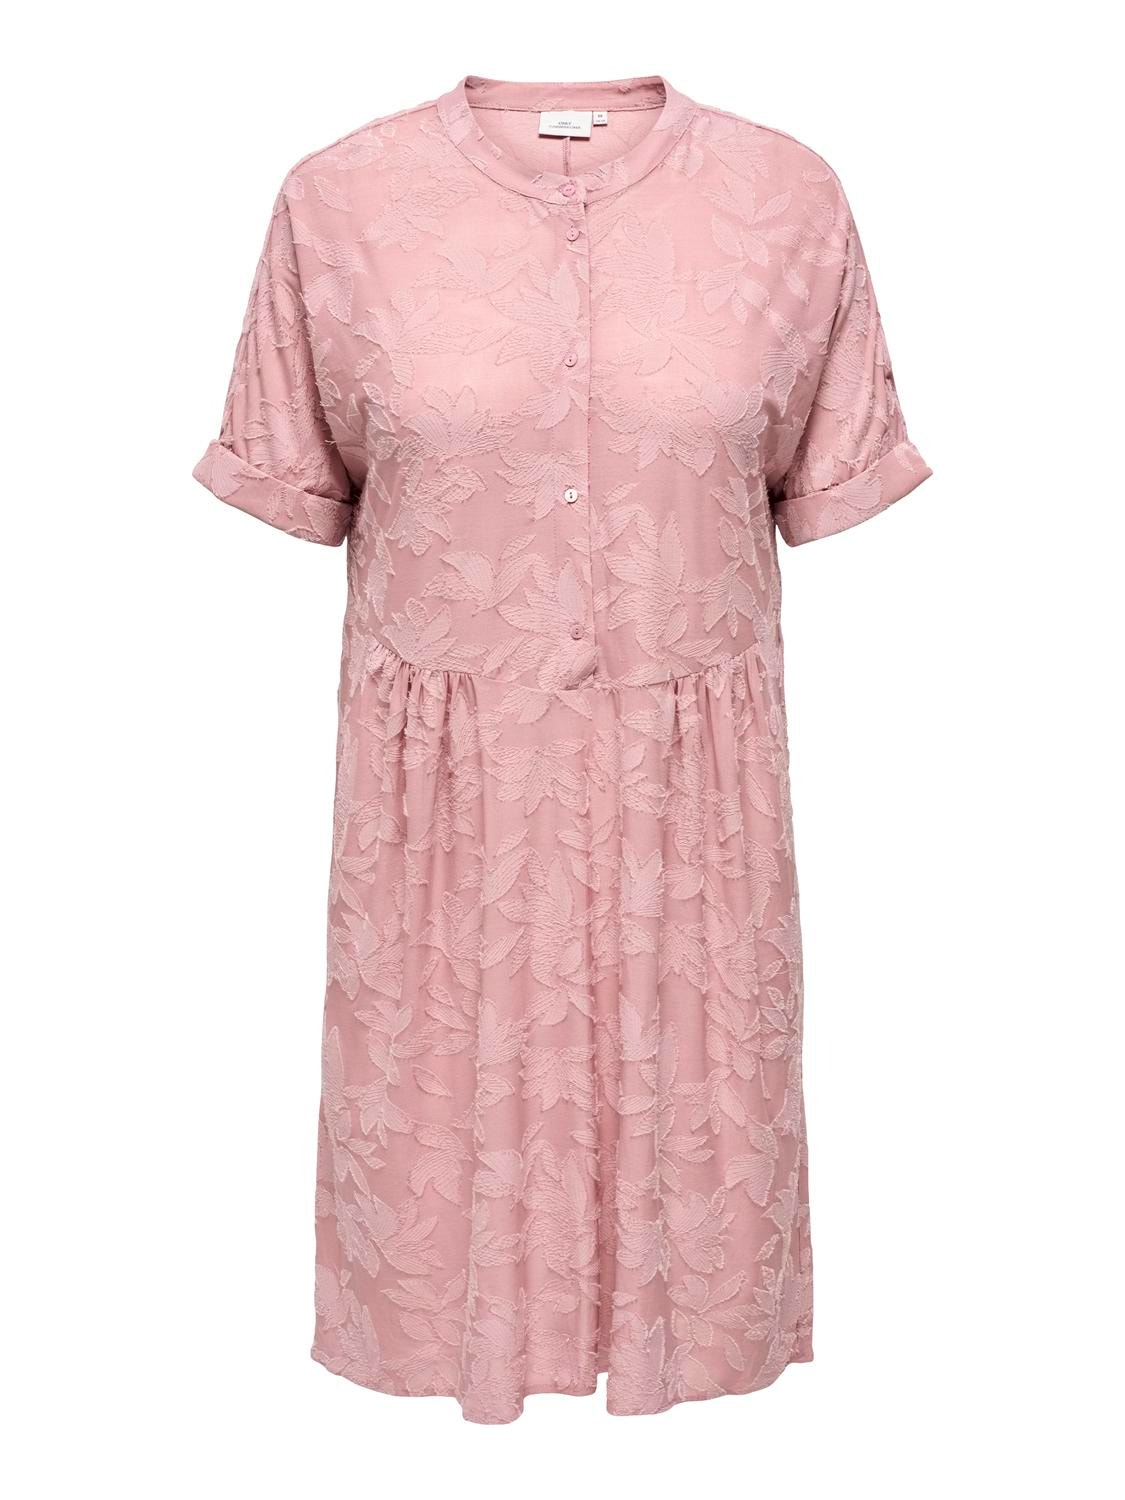 ONLY Curvy midi dress -Rose Smoke - 15319887